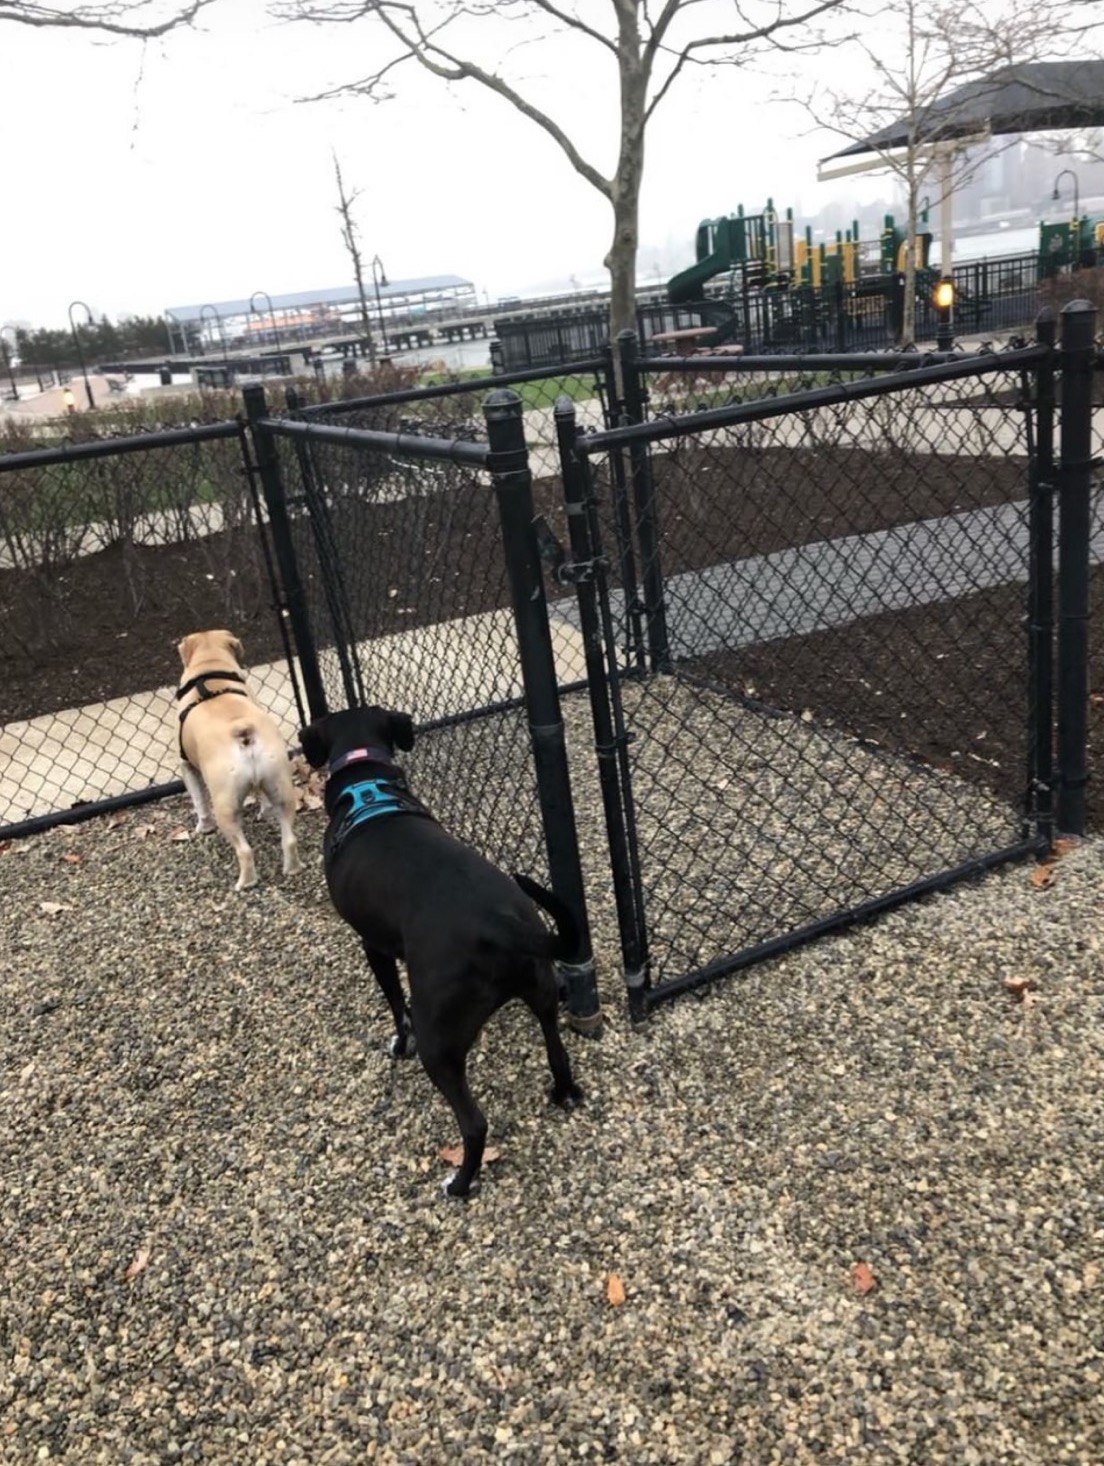 hoboken dogs staring at grass